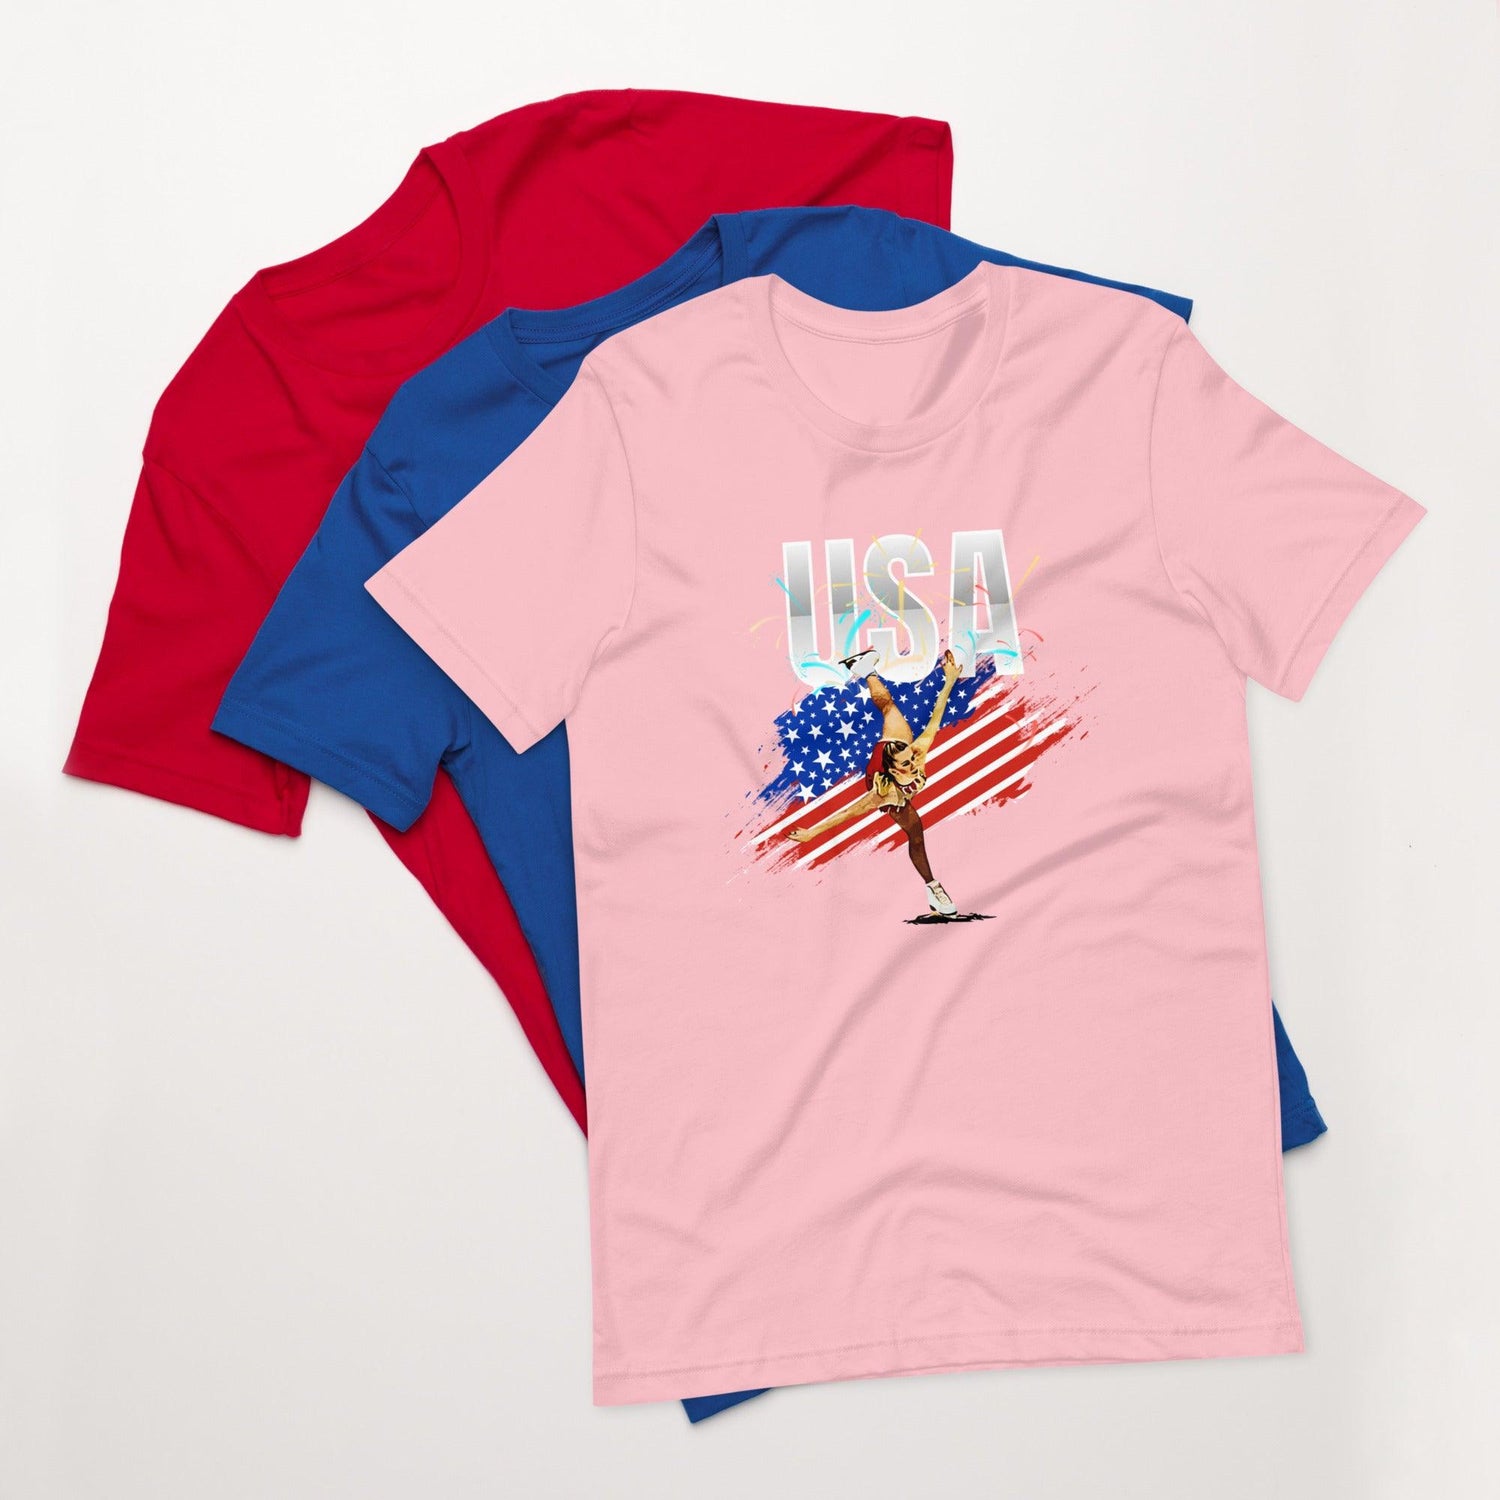 Tonya Harding "USA" Limited Edition T-shirt - Fan Arch